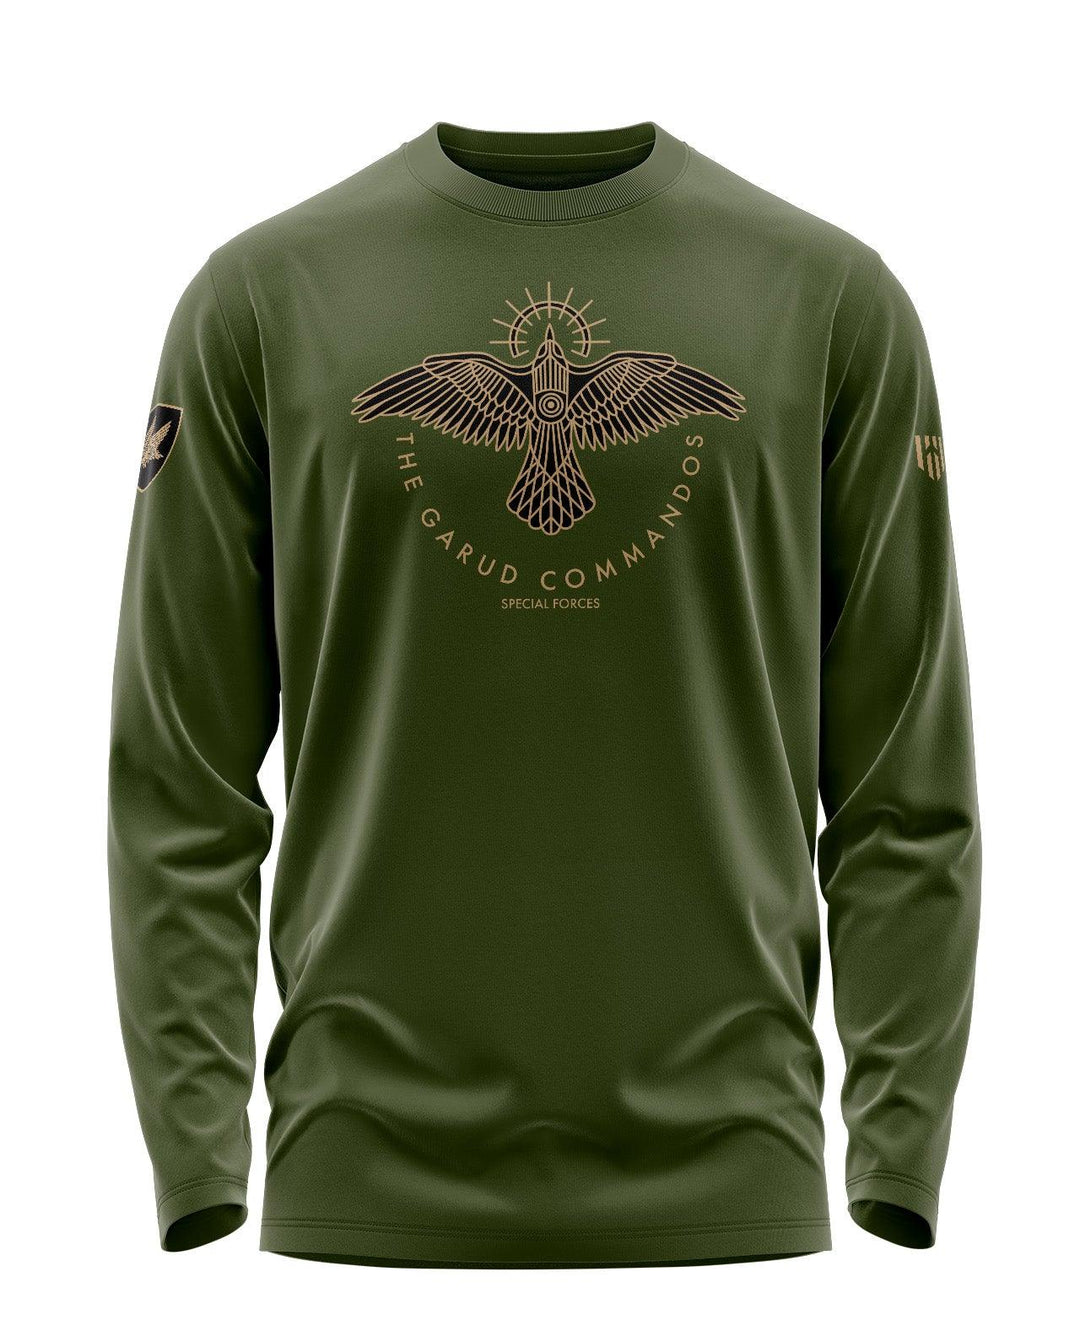 Garud Commandos SF Full Sleeve T-Shirt - Aero Armour